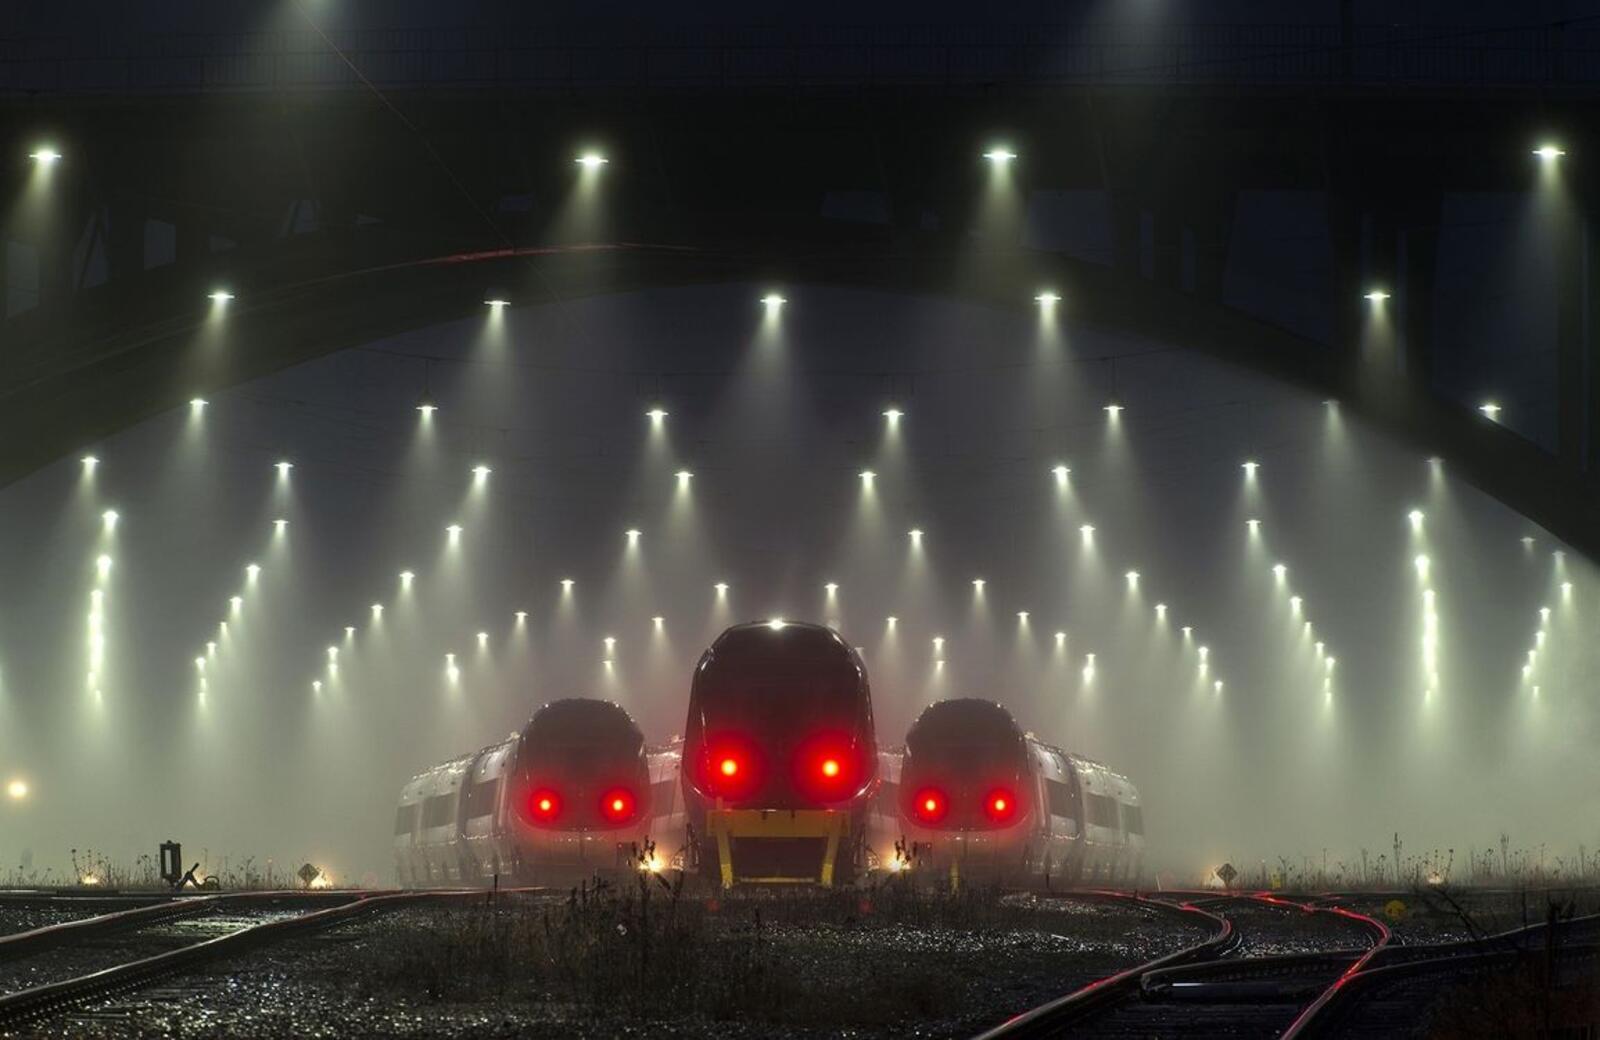 Wallpapers fog railway rails on the desktop